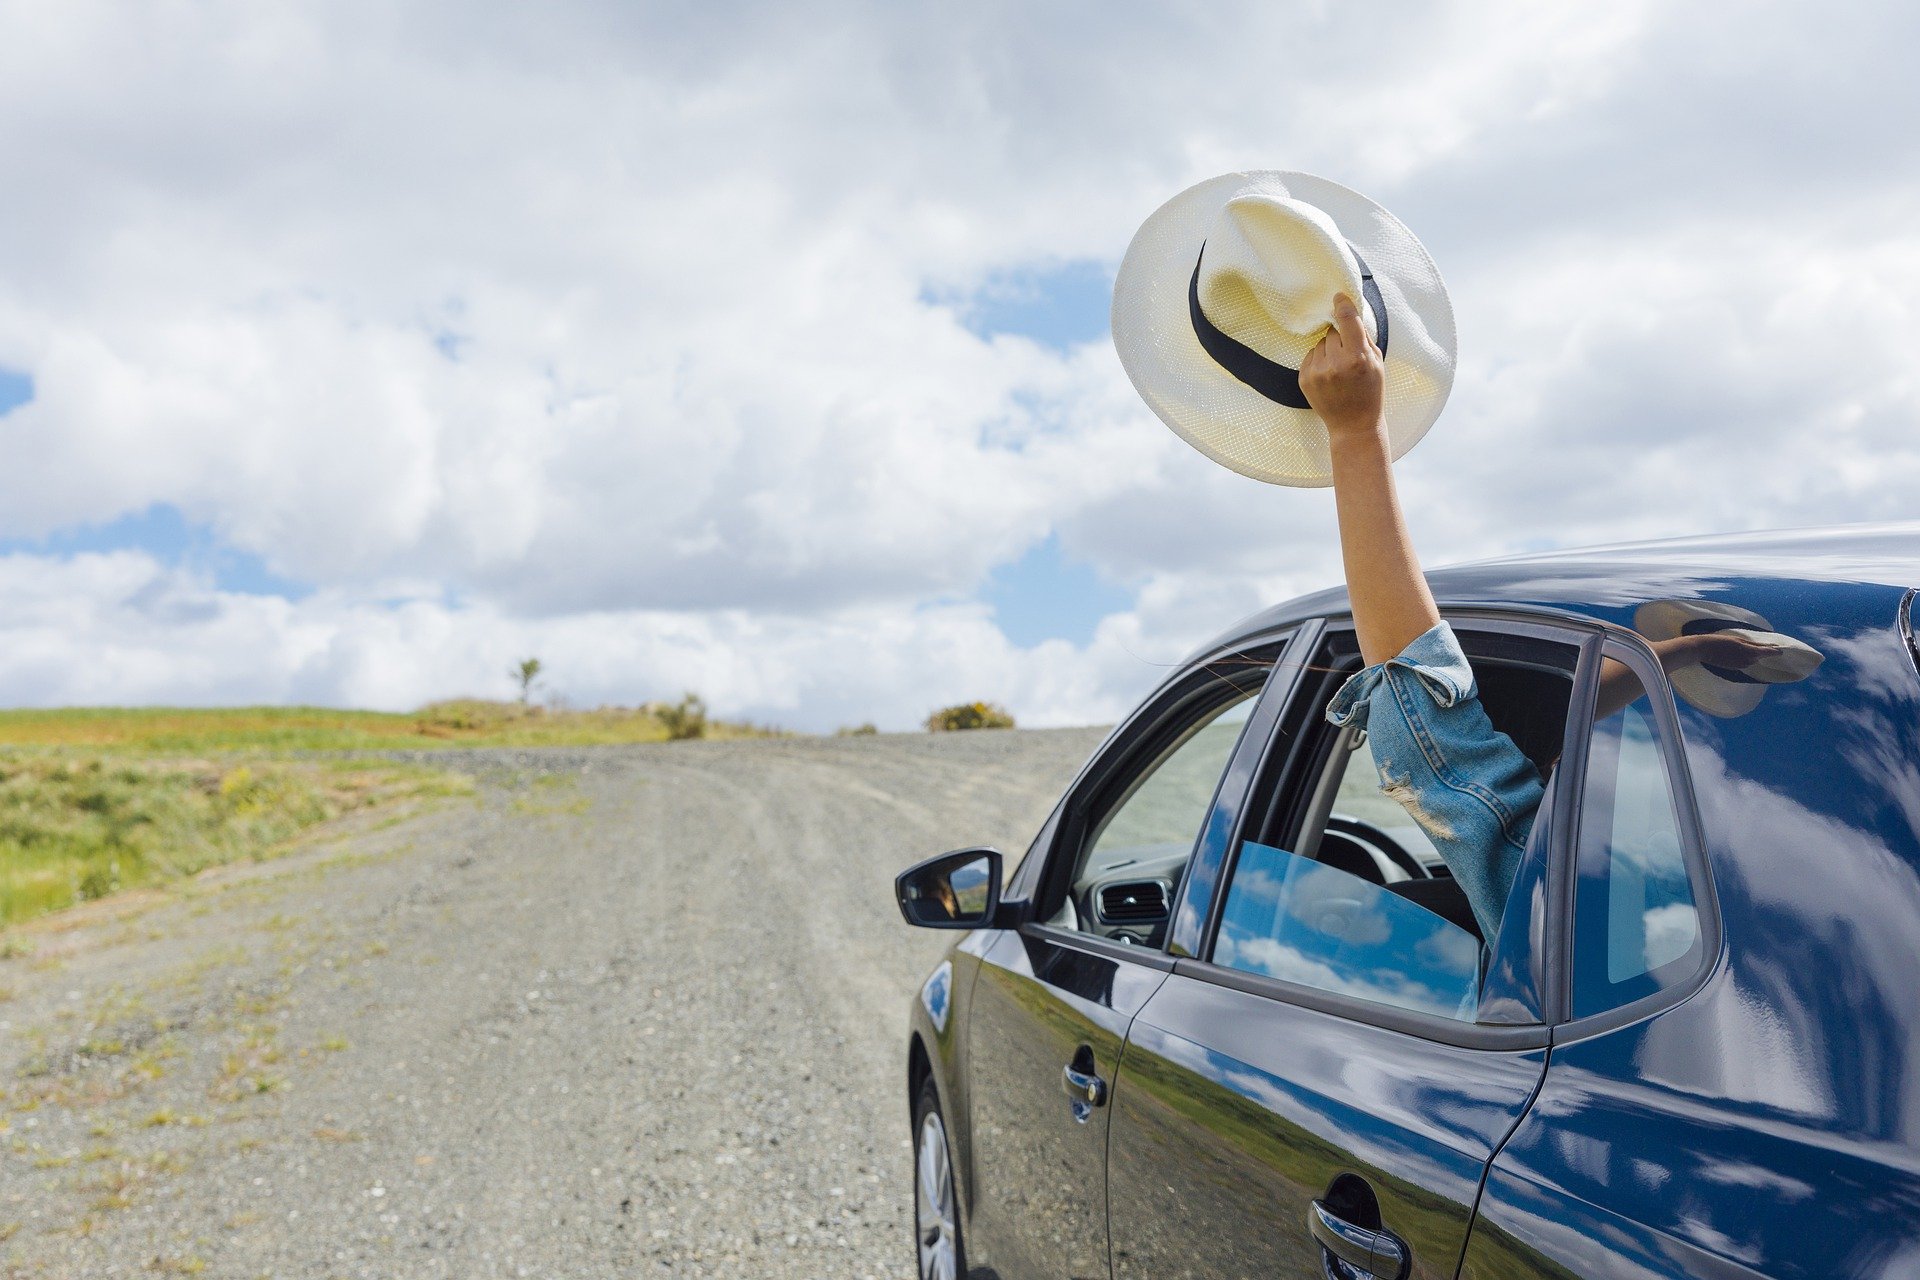 Car driving down dirt road, woman waving hat from rear window; image by Tekhnika, via Pixabay.com